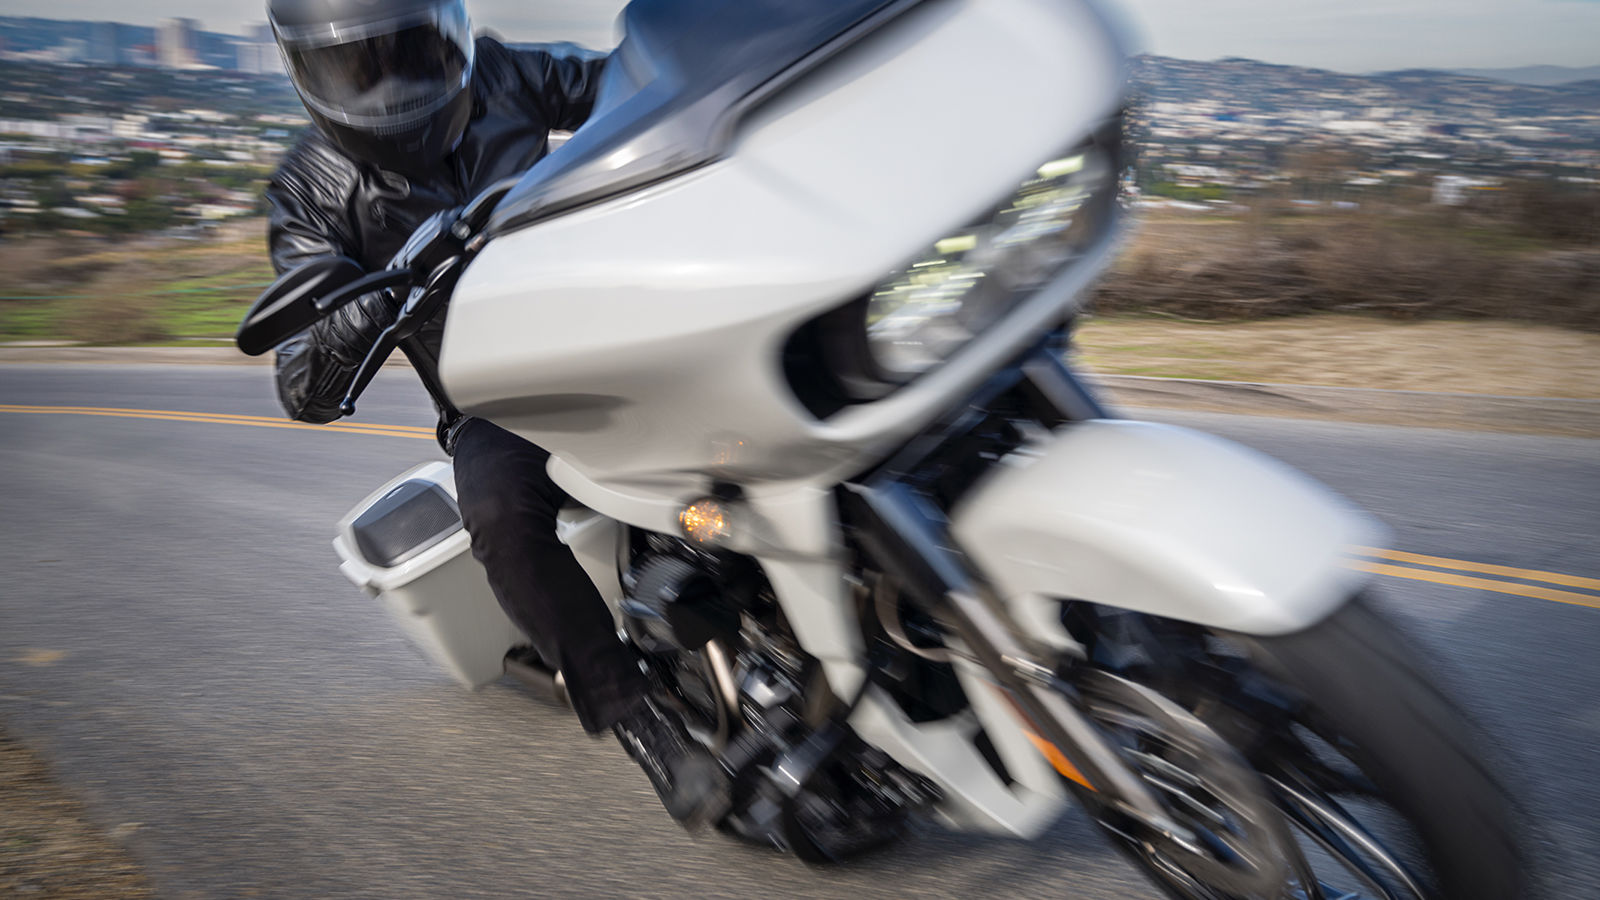 Harley Davidson Cvo Road Glide Neufahrzeug Kaufen Bei Thunderbike